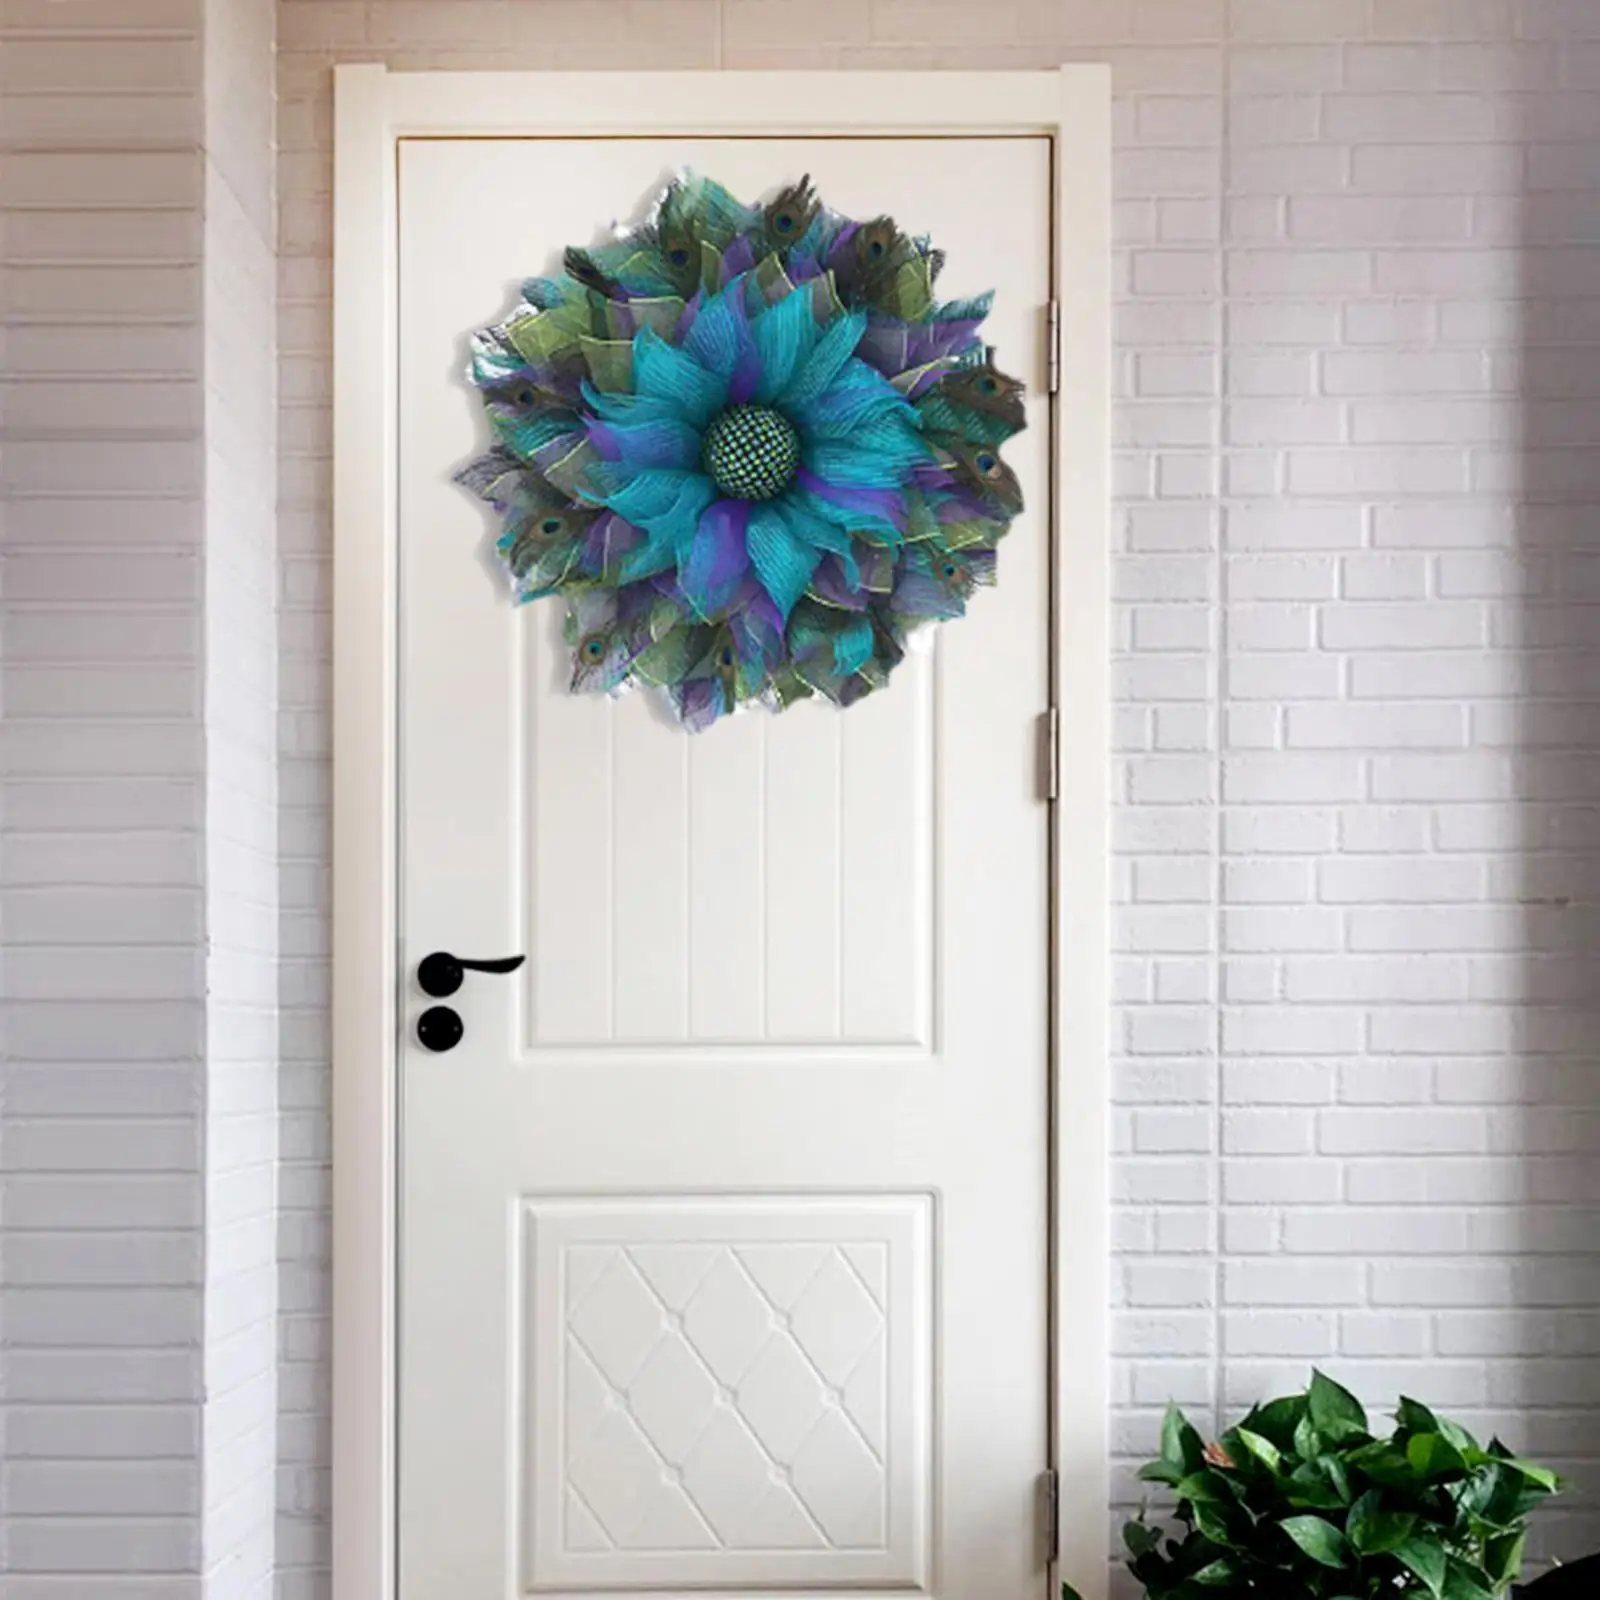 30cm Artificial Peacock Wreath Flower Garland for Front Door Wall Decorative